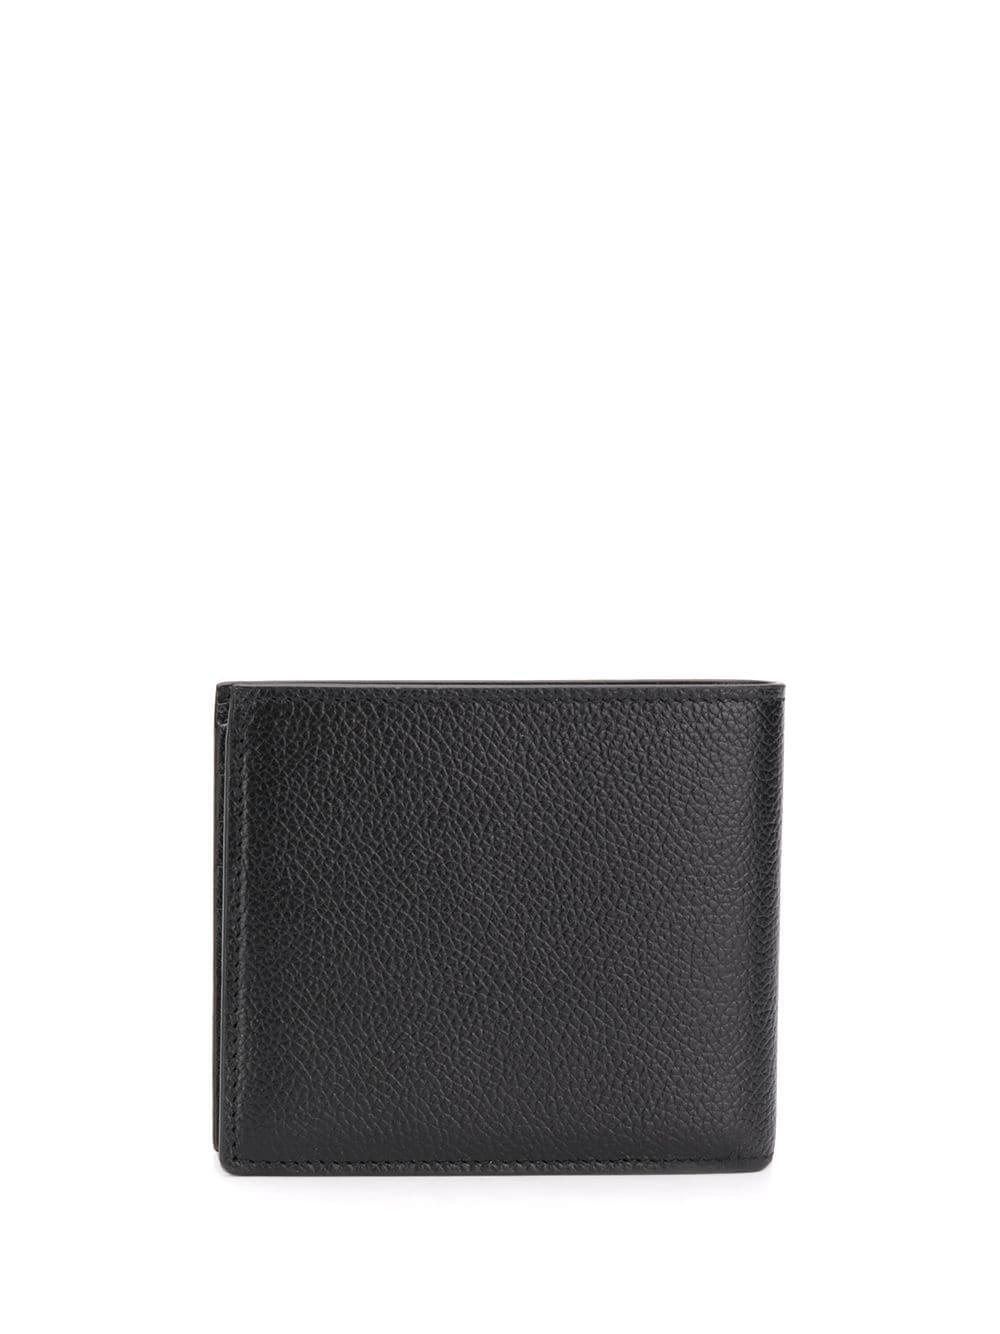 Balenciaga Square Folded Wallet in Black for Men | Lyst